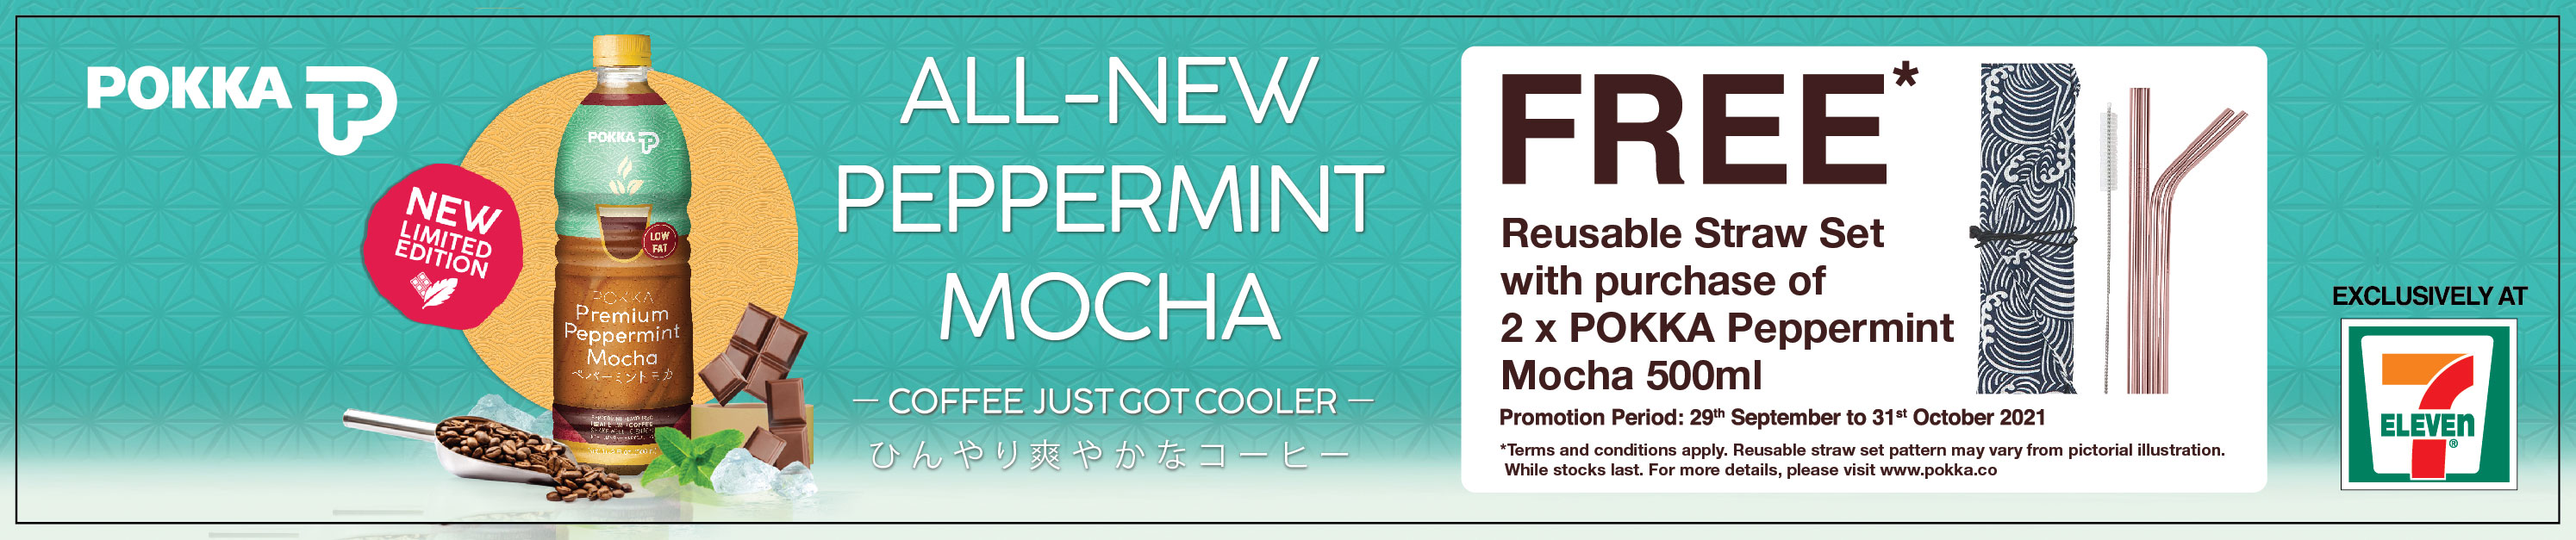 Premium Peppermint Mocha